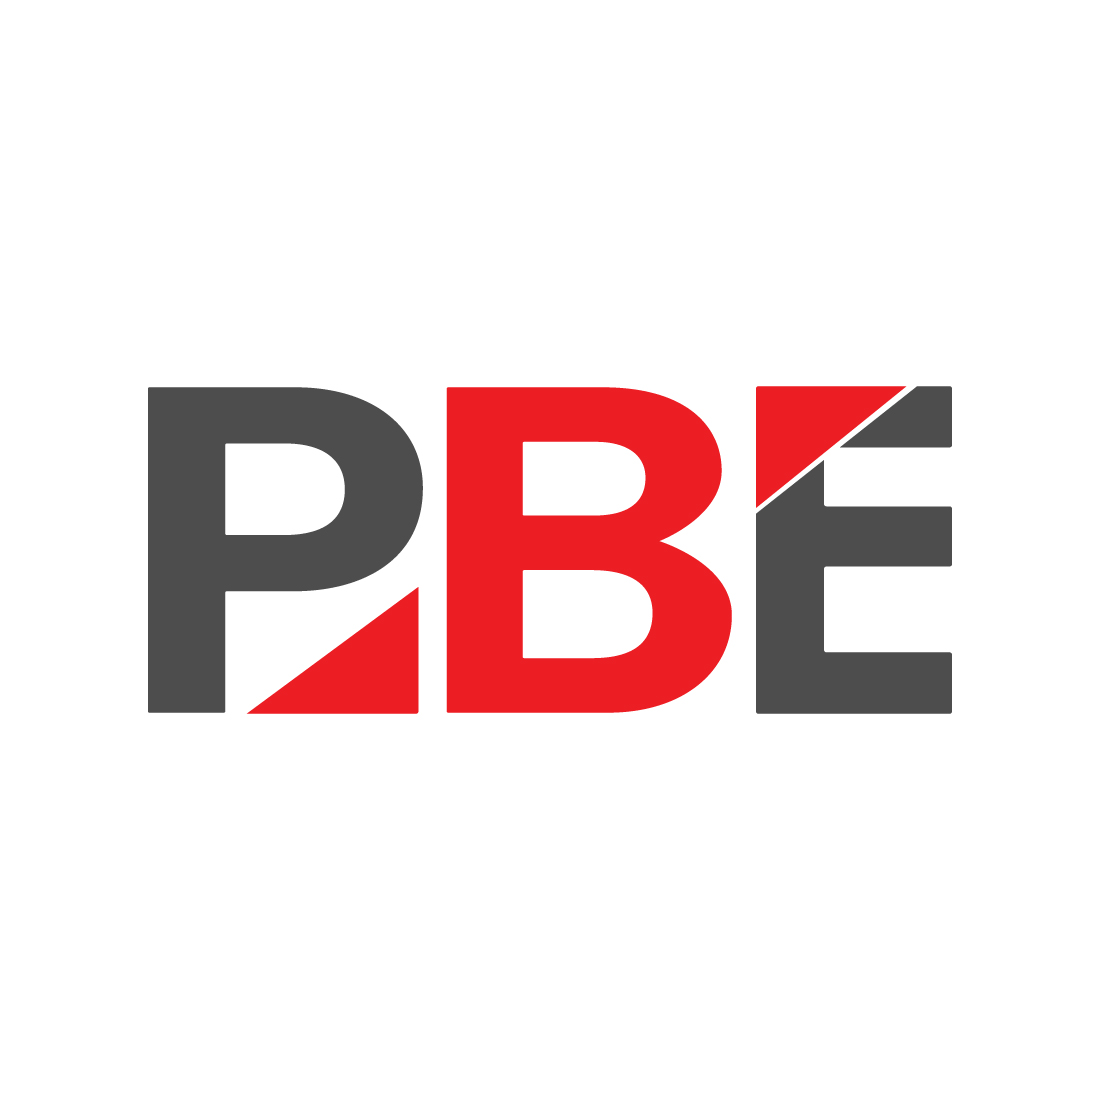 Professional PBE letters logo design vector images PBE logo design template design, Premium, vector, illustration preview image.